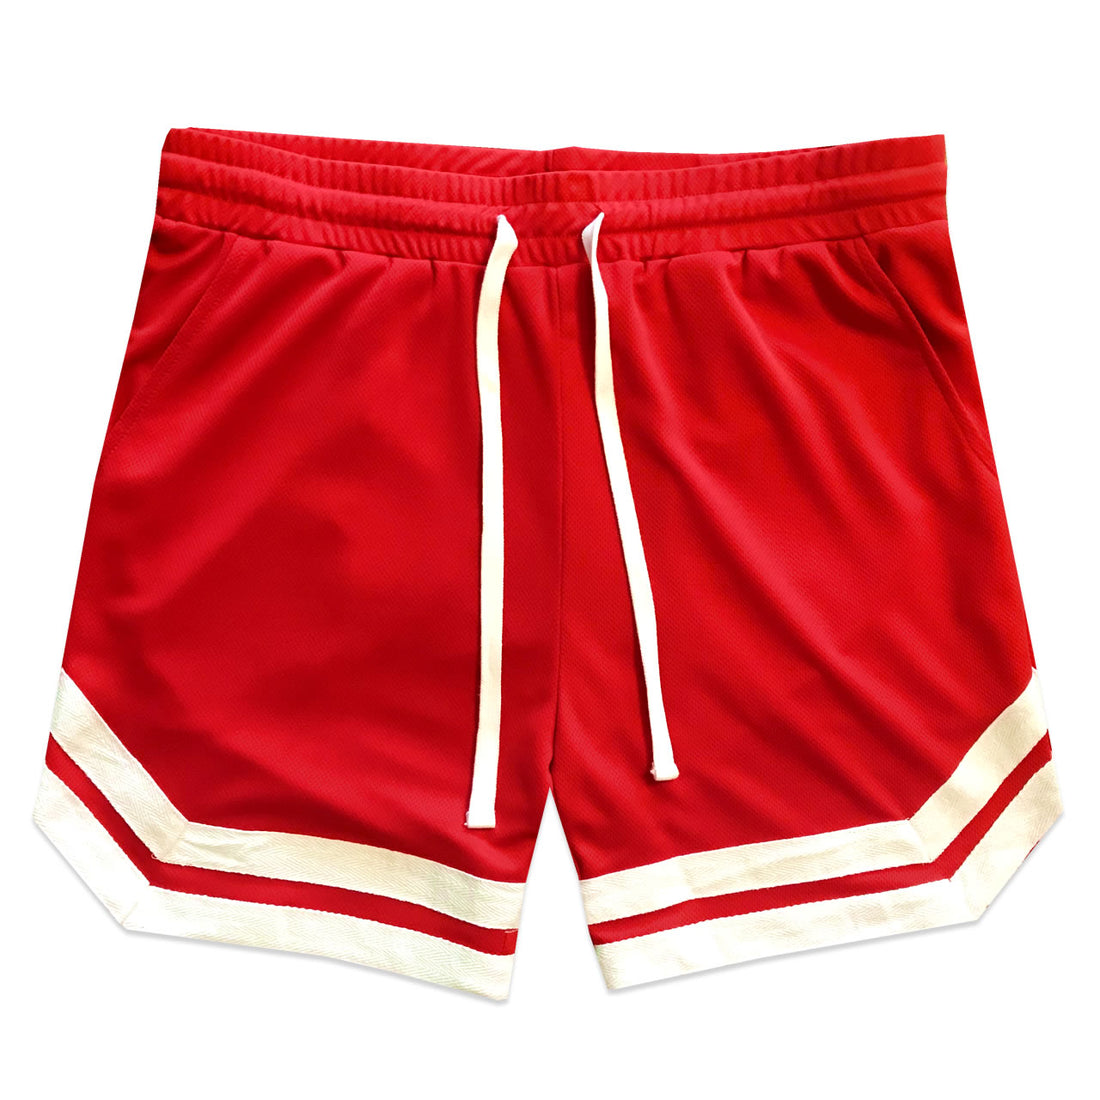 Red Mens Mesh Basketball Shorts With Pockets